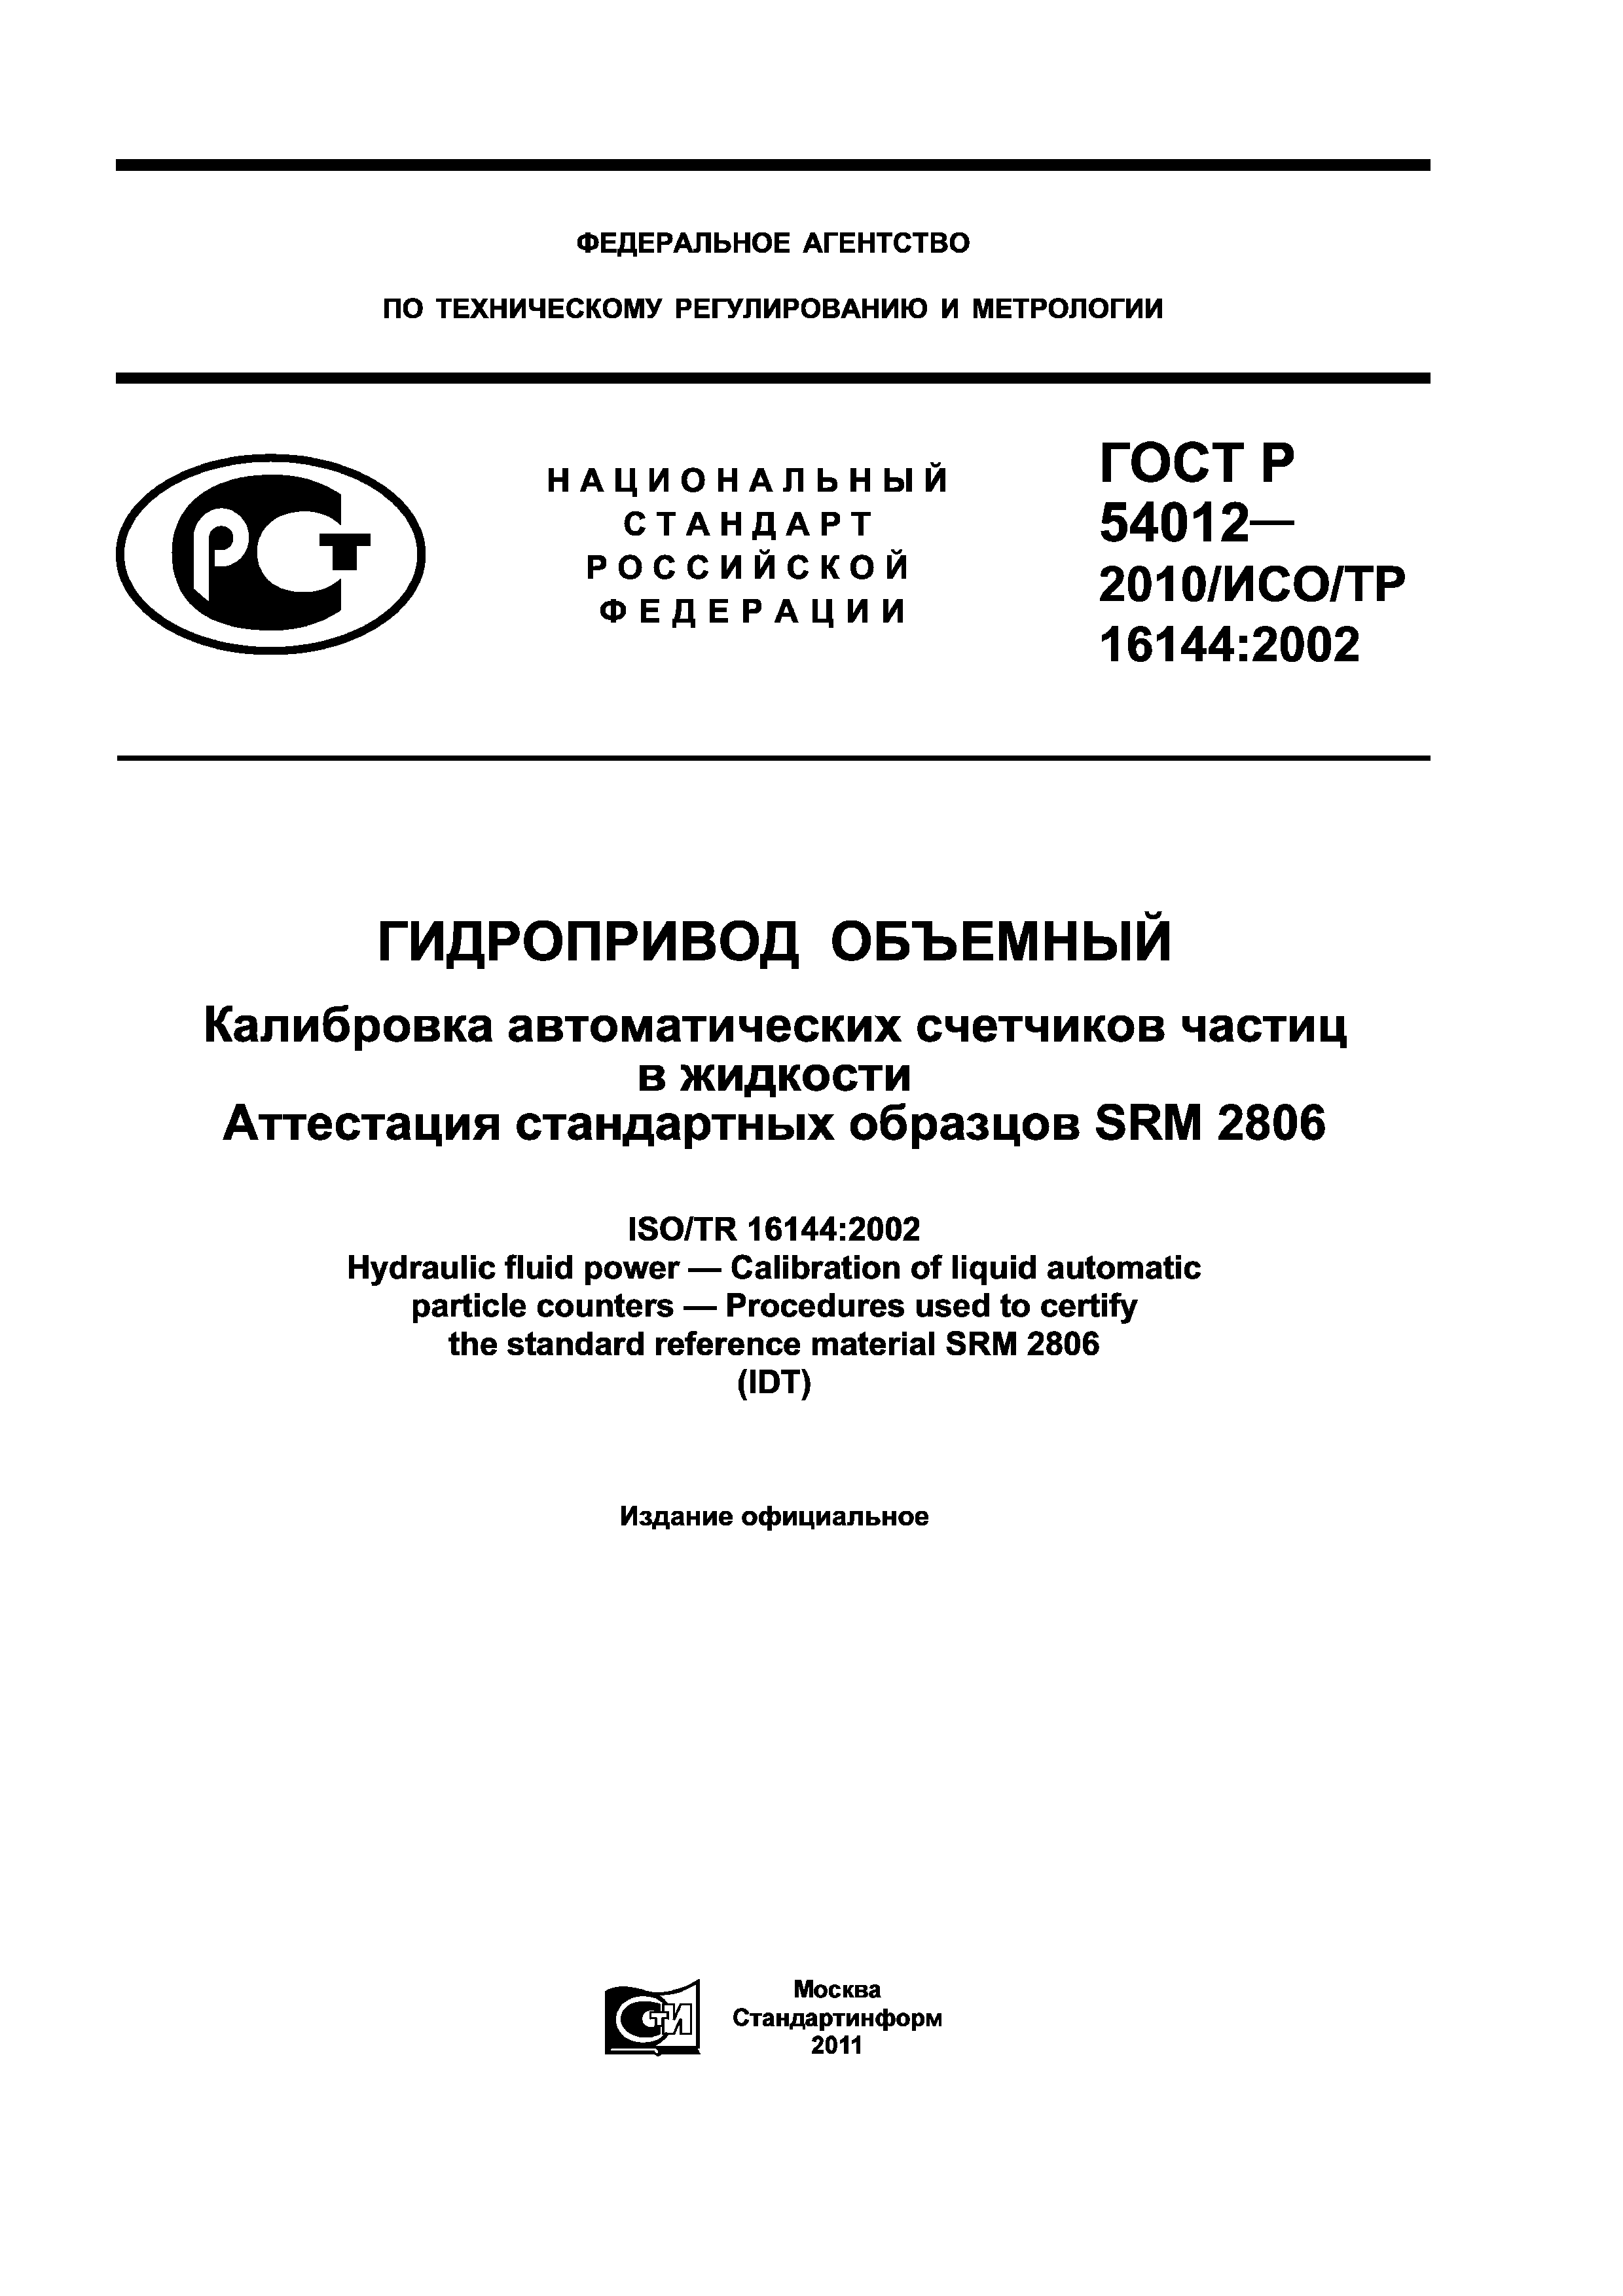 ГОСТ Р 54012-2010